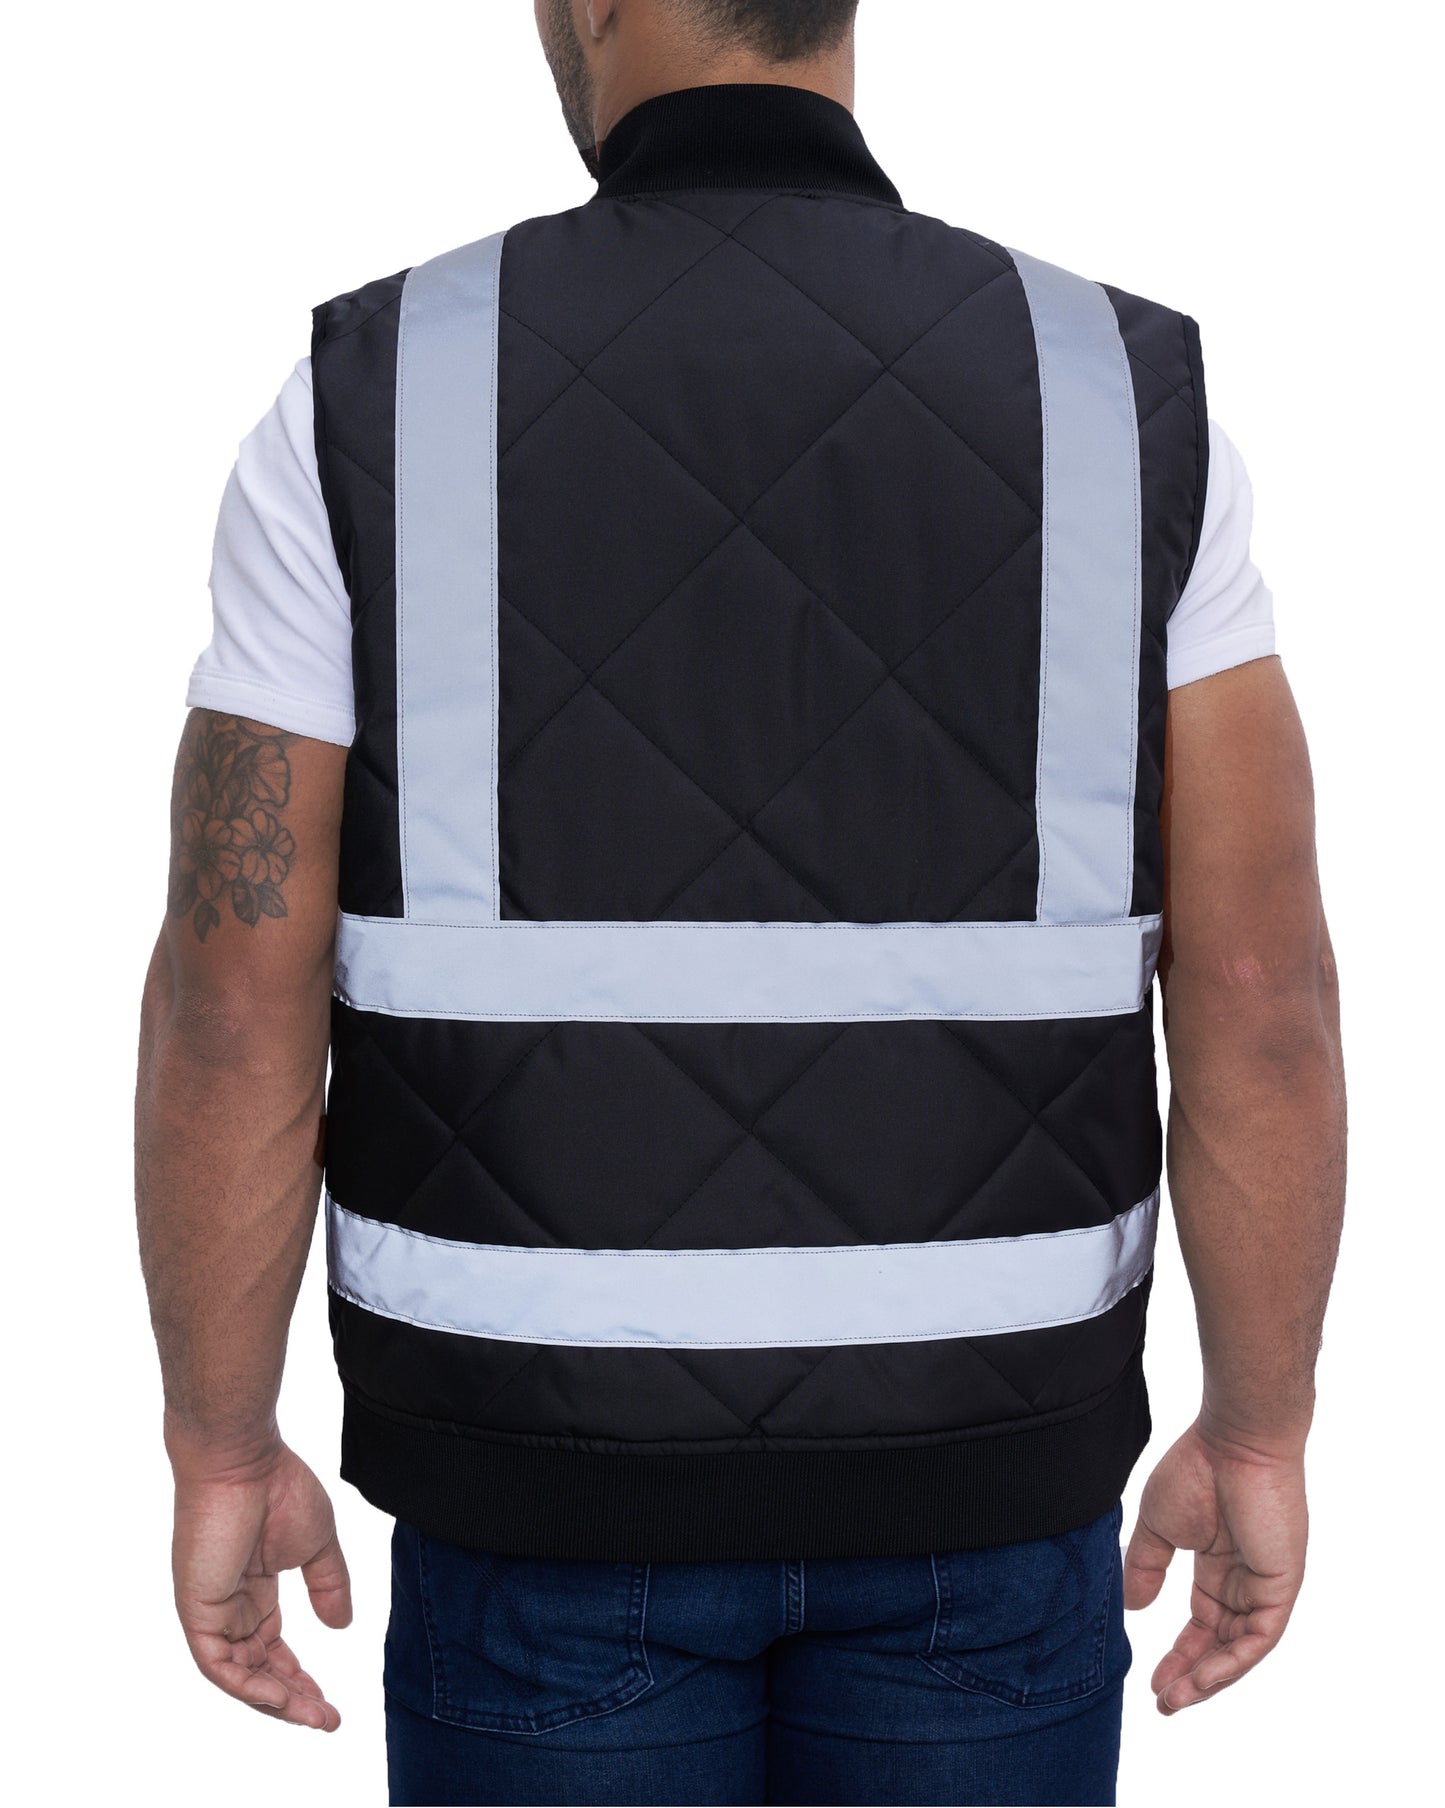 Enhanced Visibility Warm Up Vest